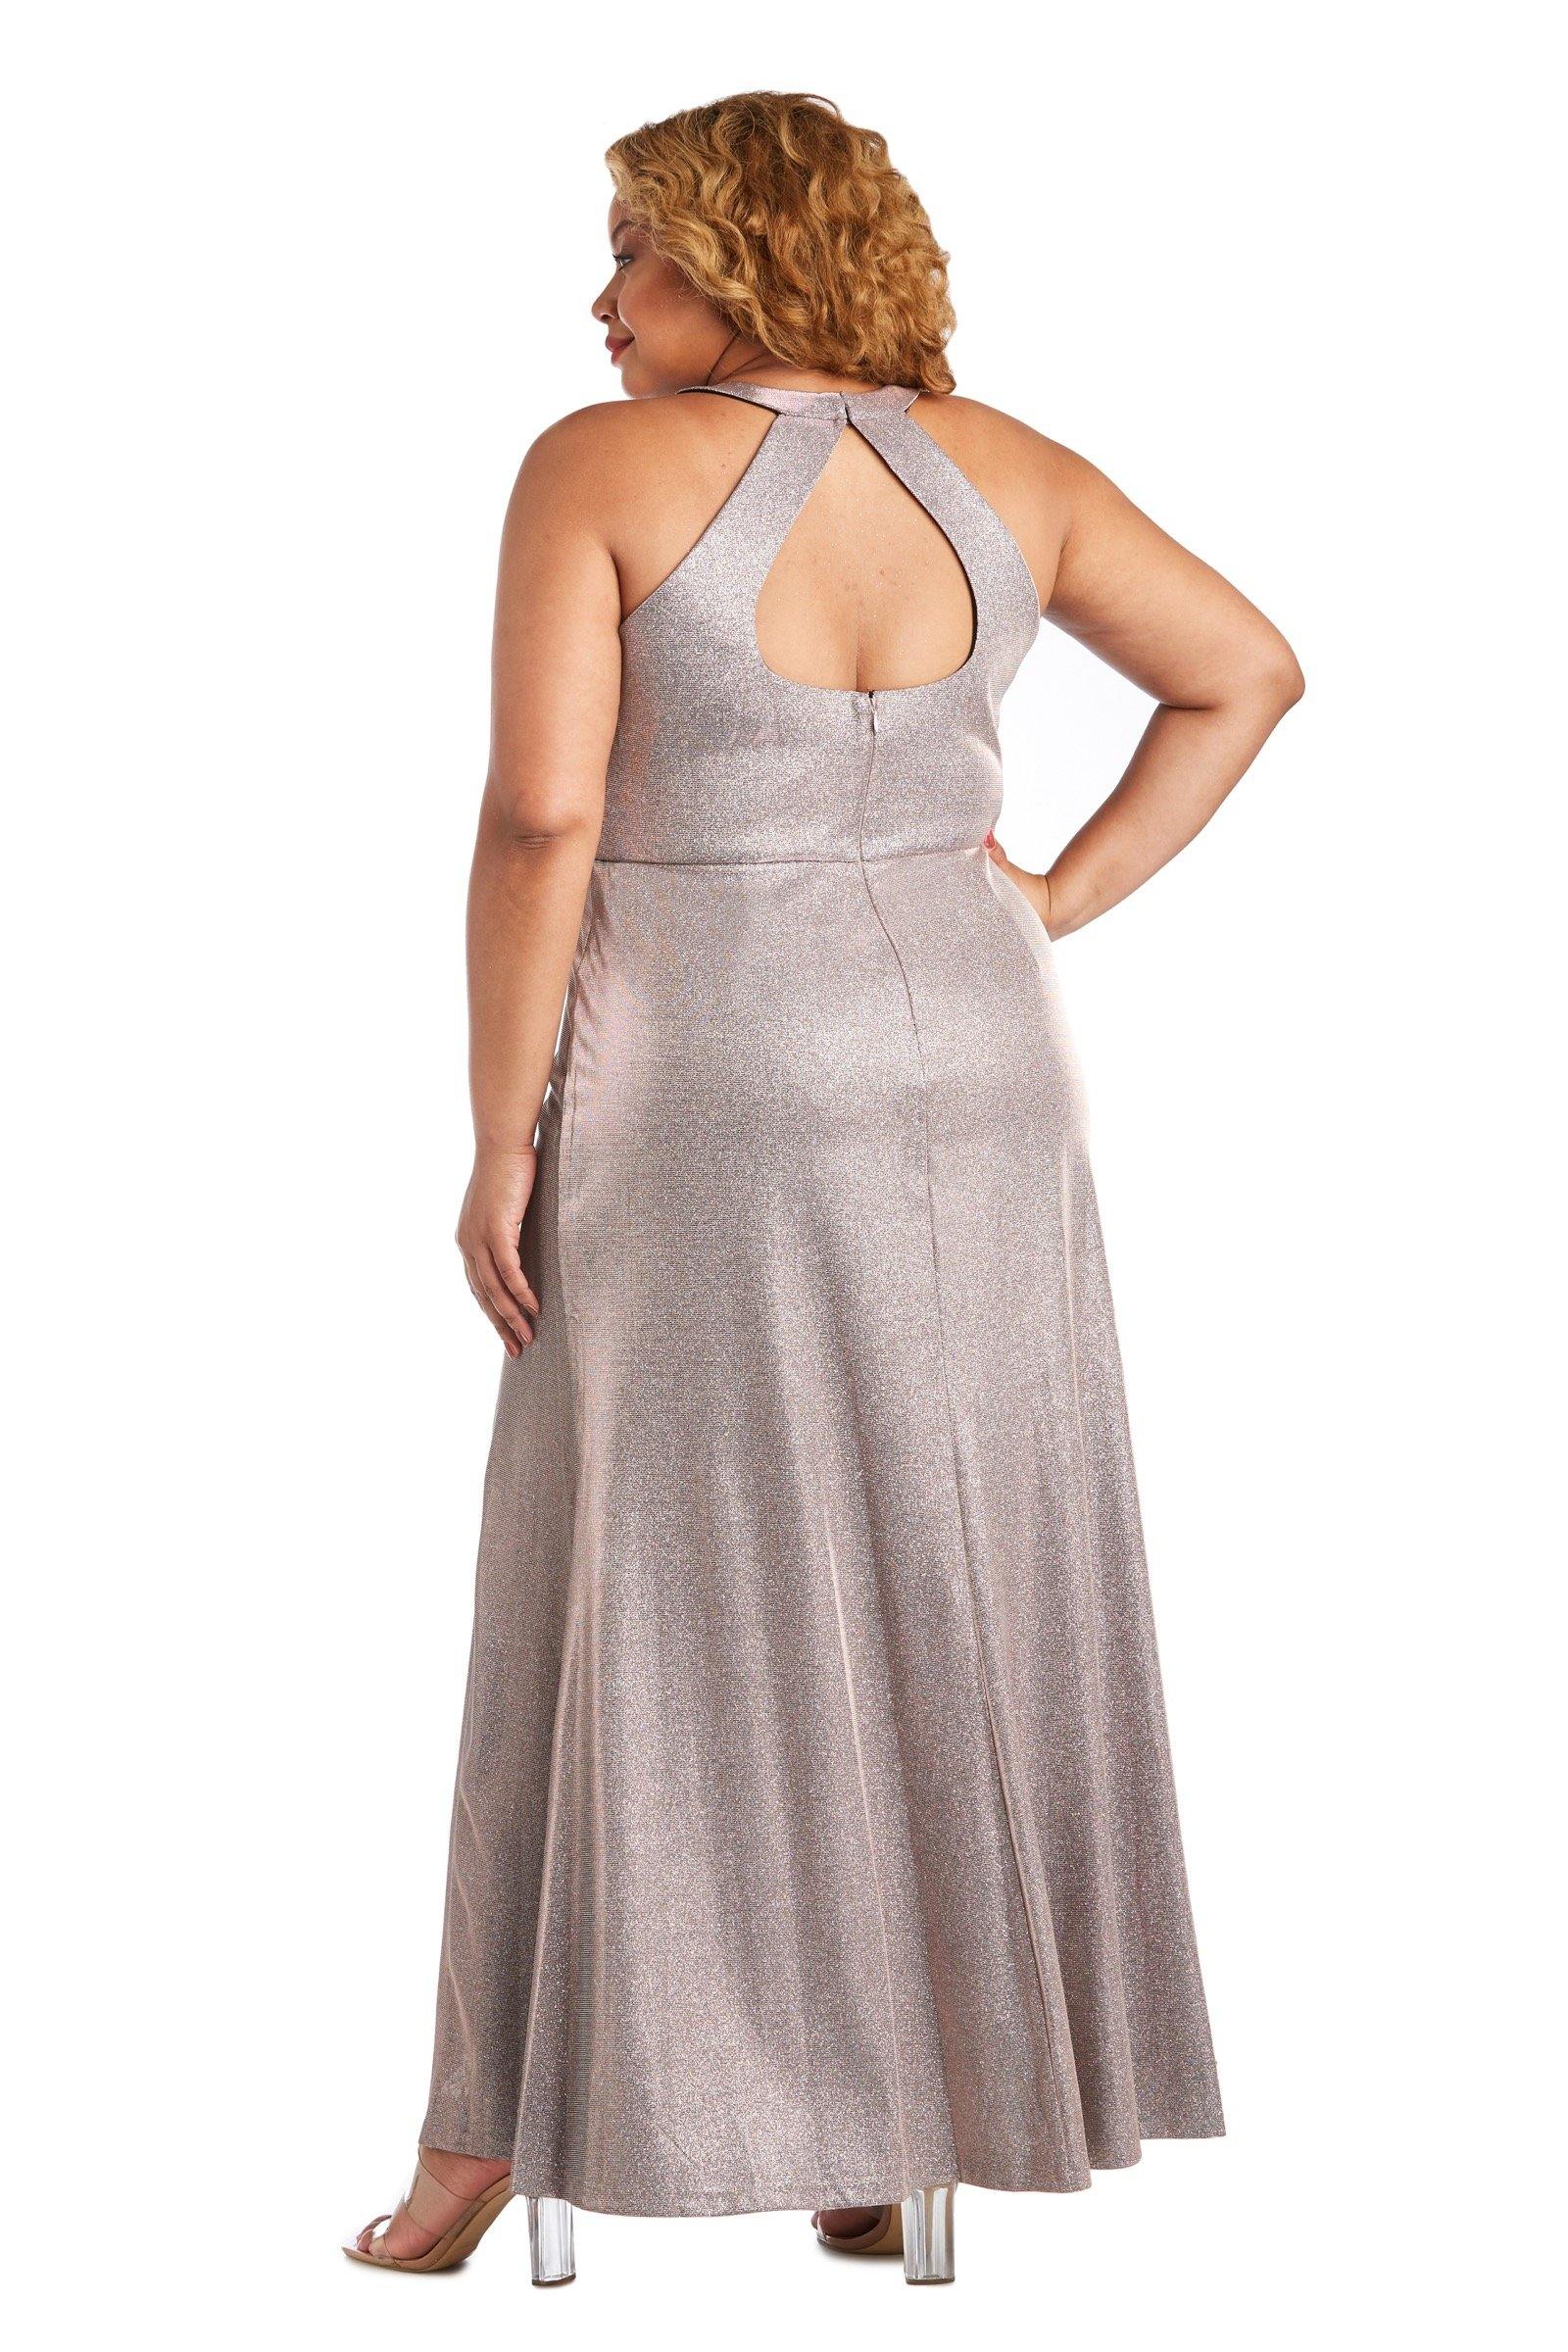 Morgan & Co Long Plus Size Glitter Dress 12835WM - The Dress Outlet